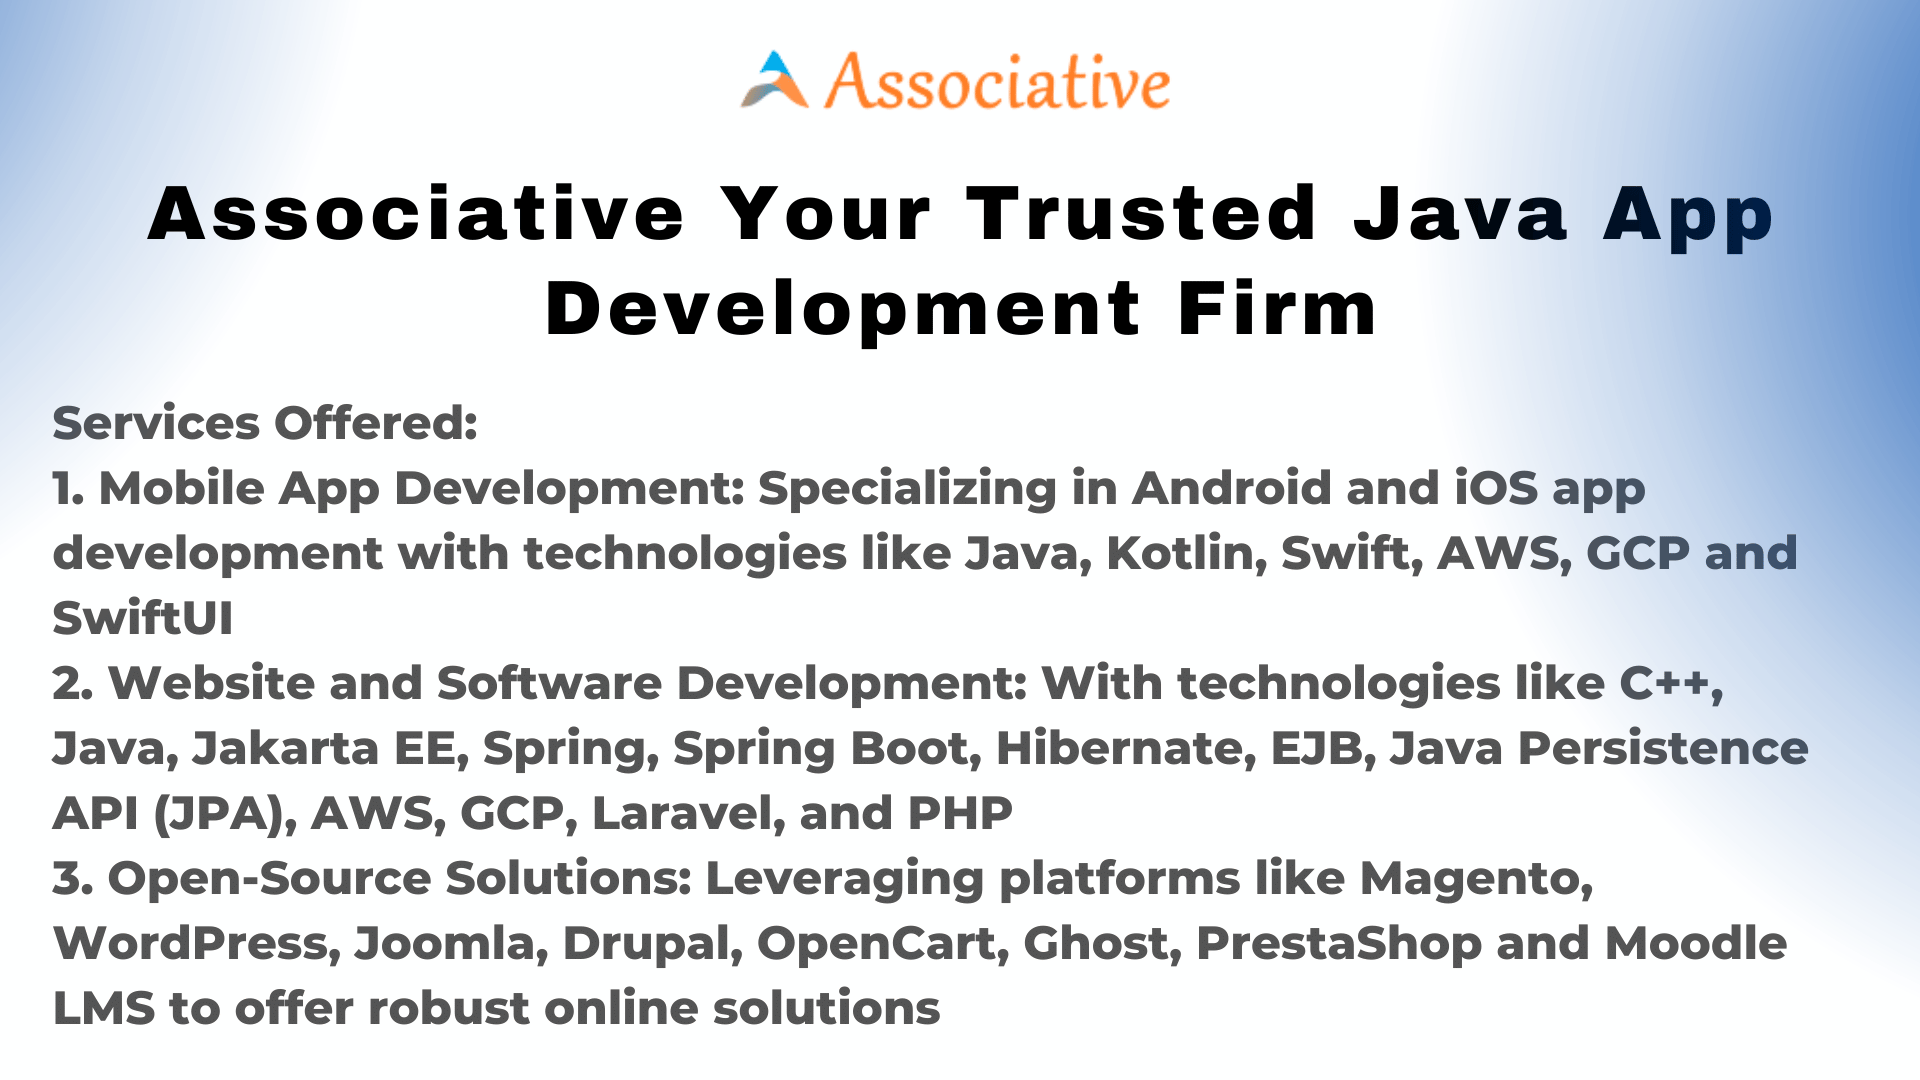 Associative Your Trusted Java App Development Firm